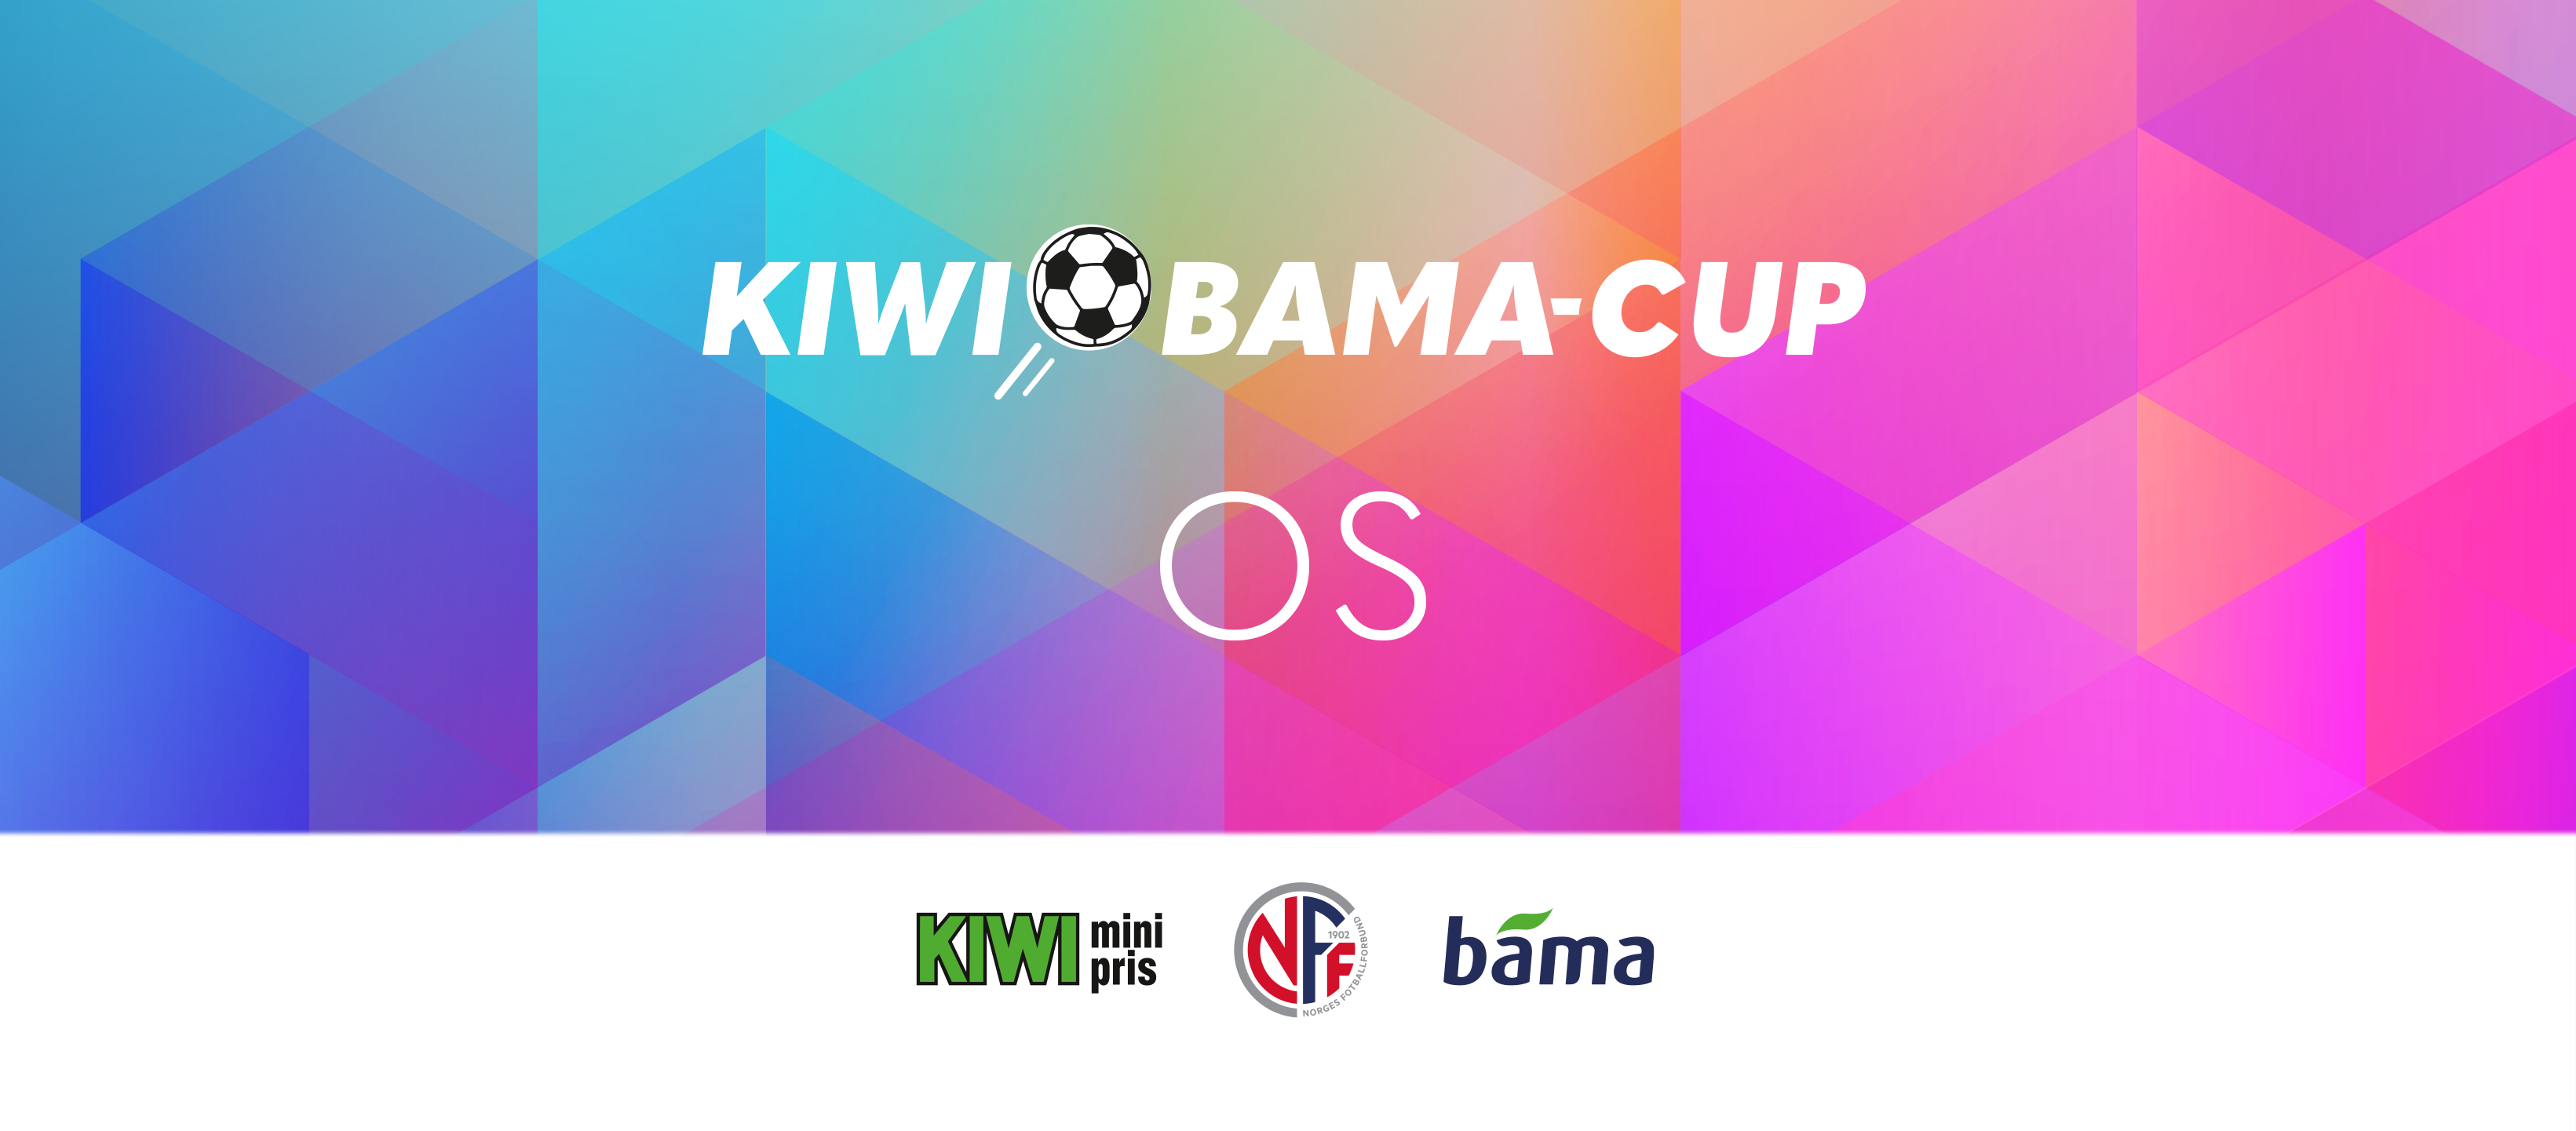 FB-BANNER KIWI-BAMA-Cup - OS.png